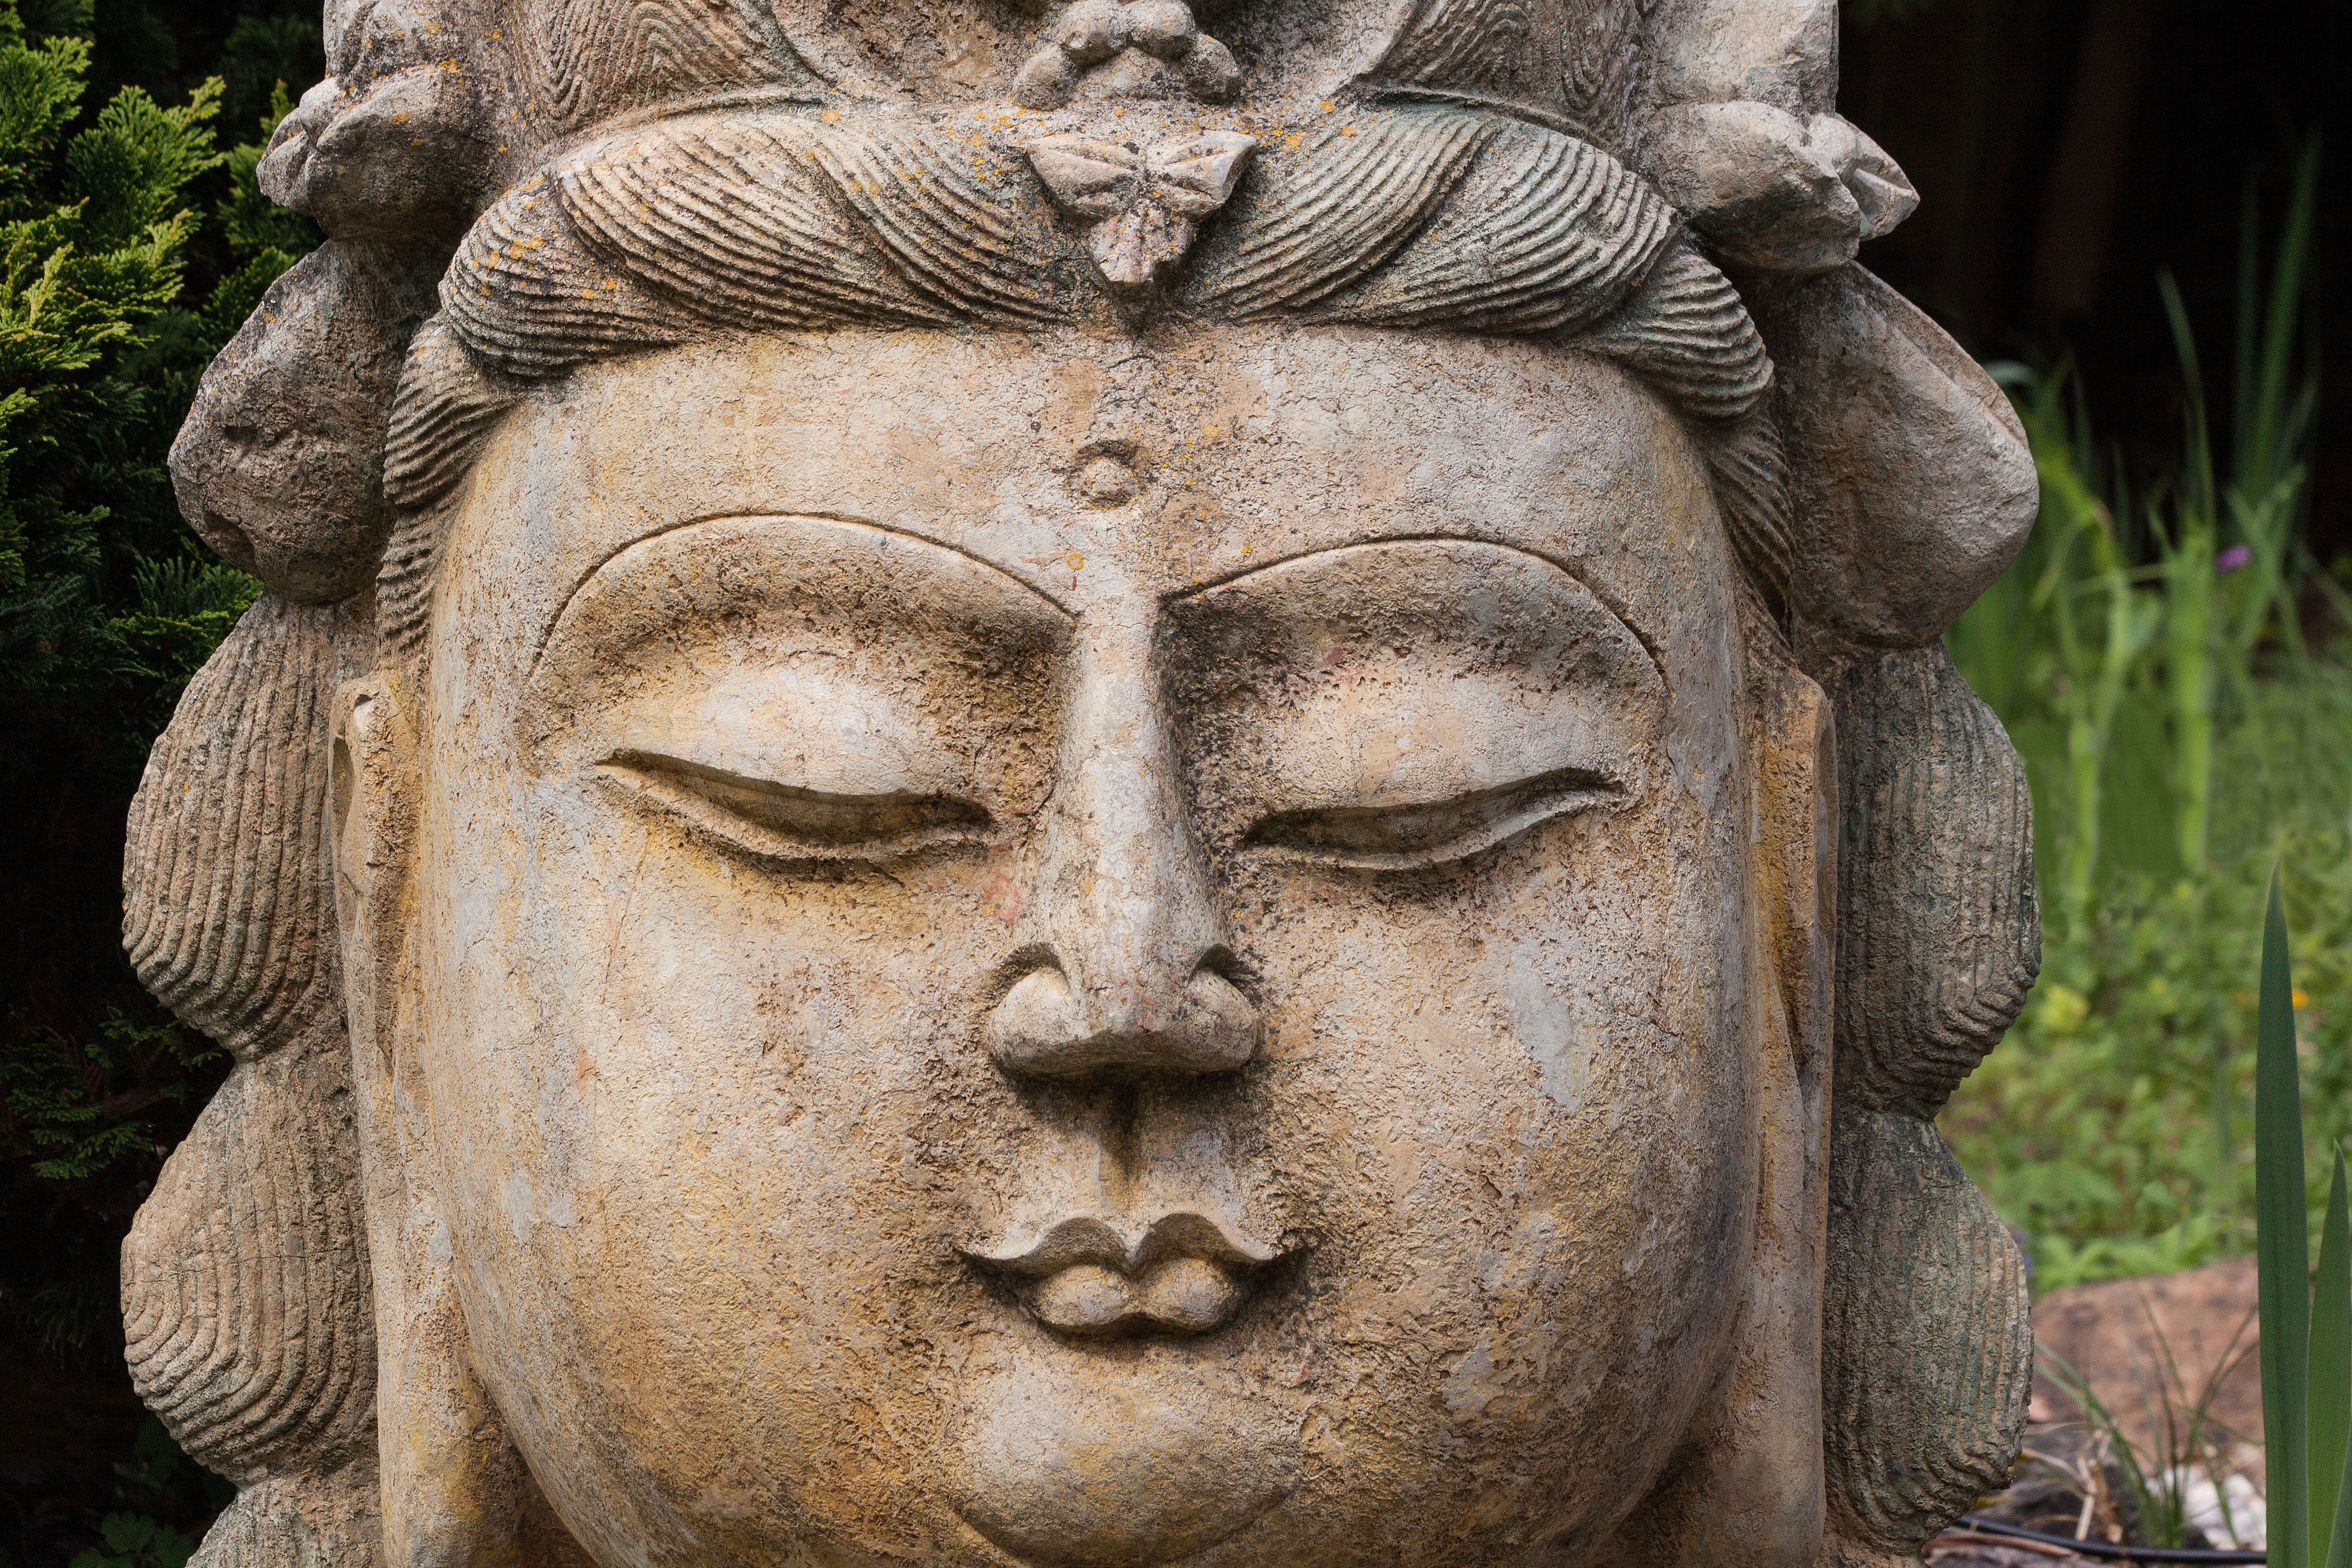 brown and grey ceramic buddha head sculpture